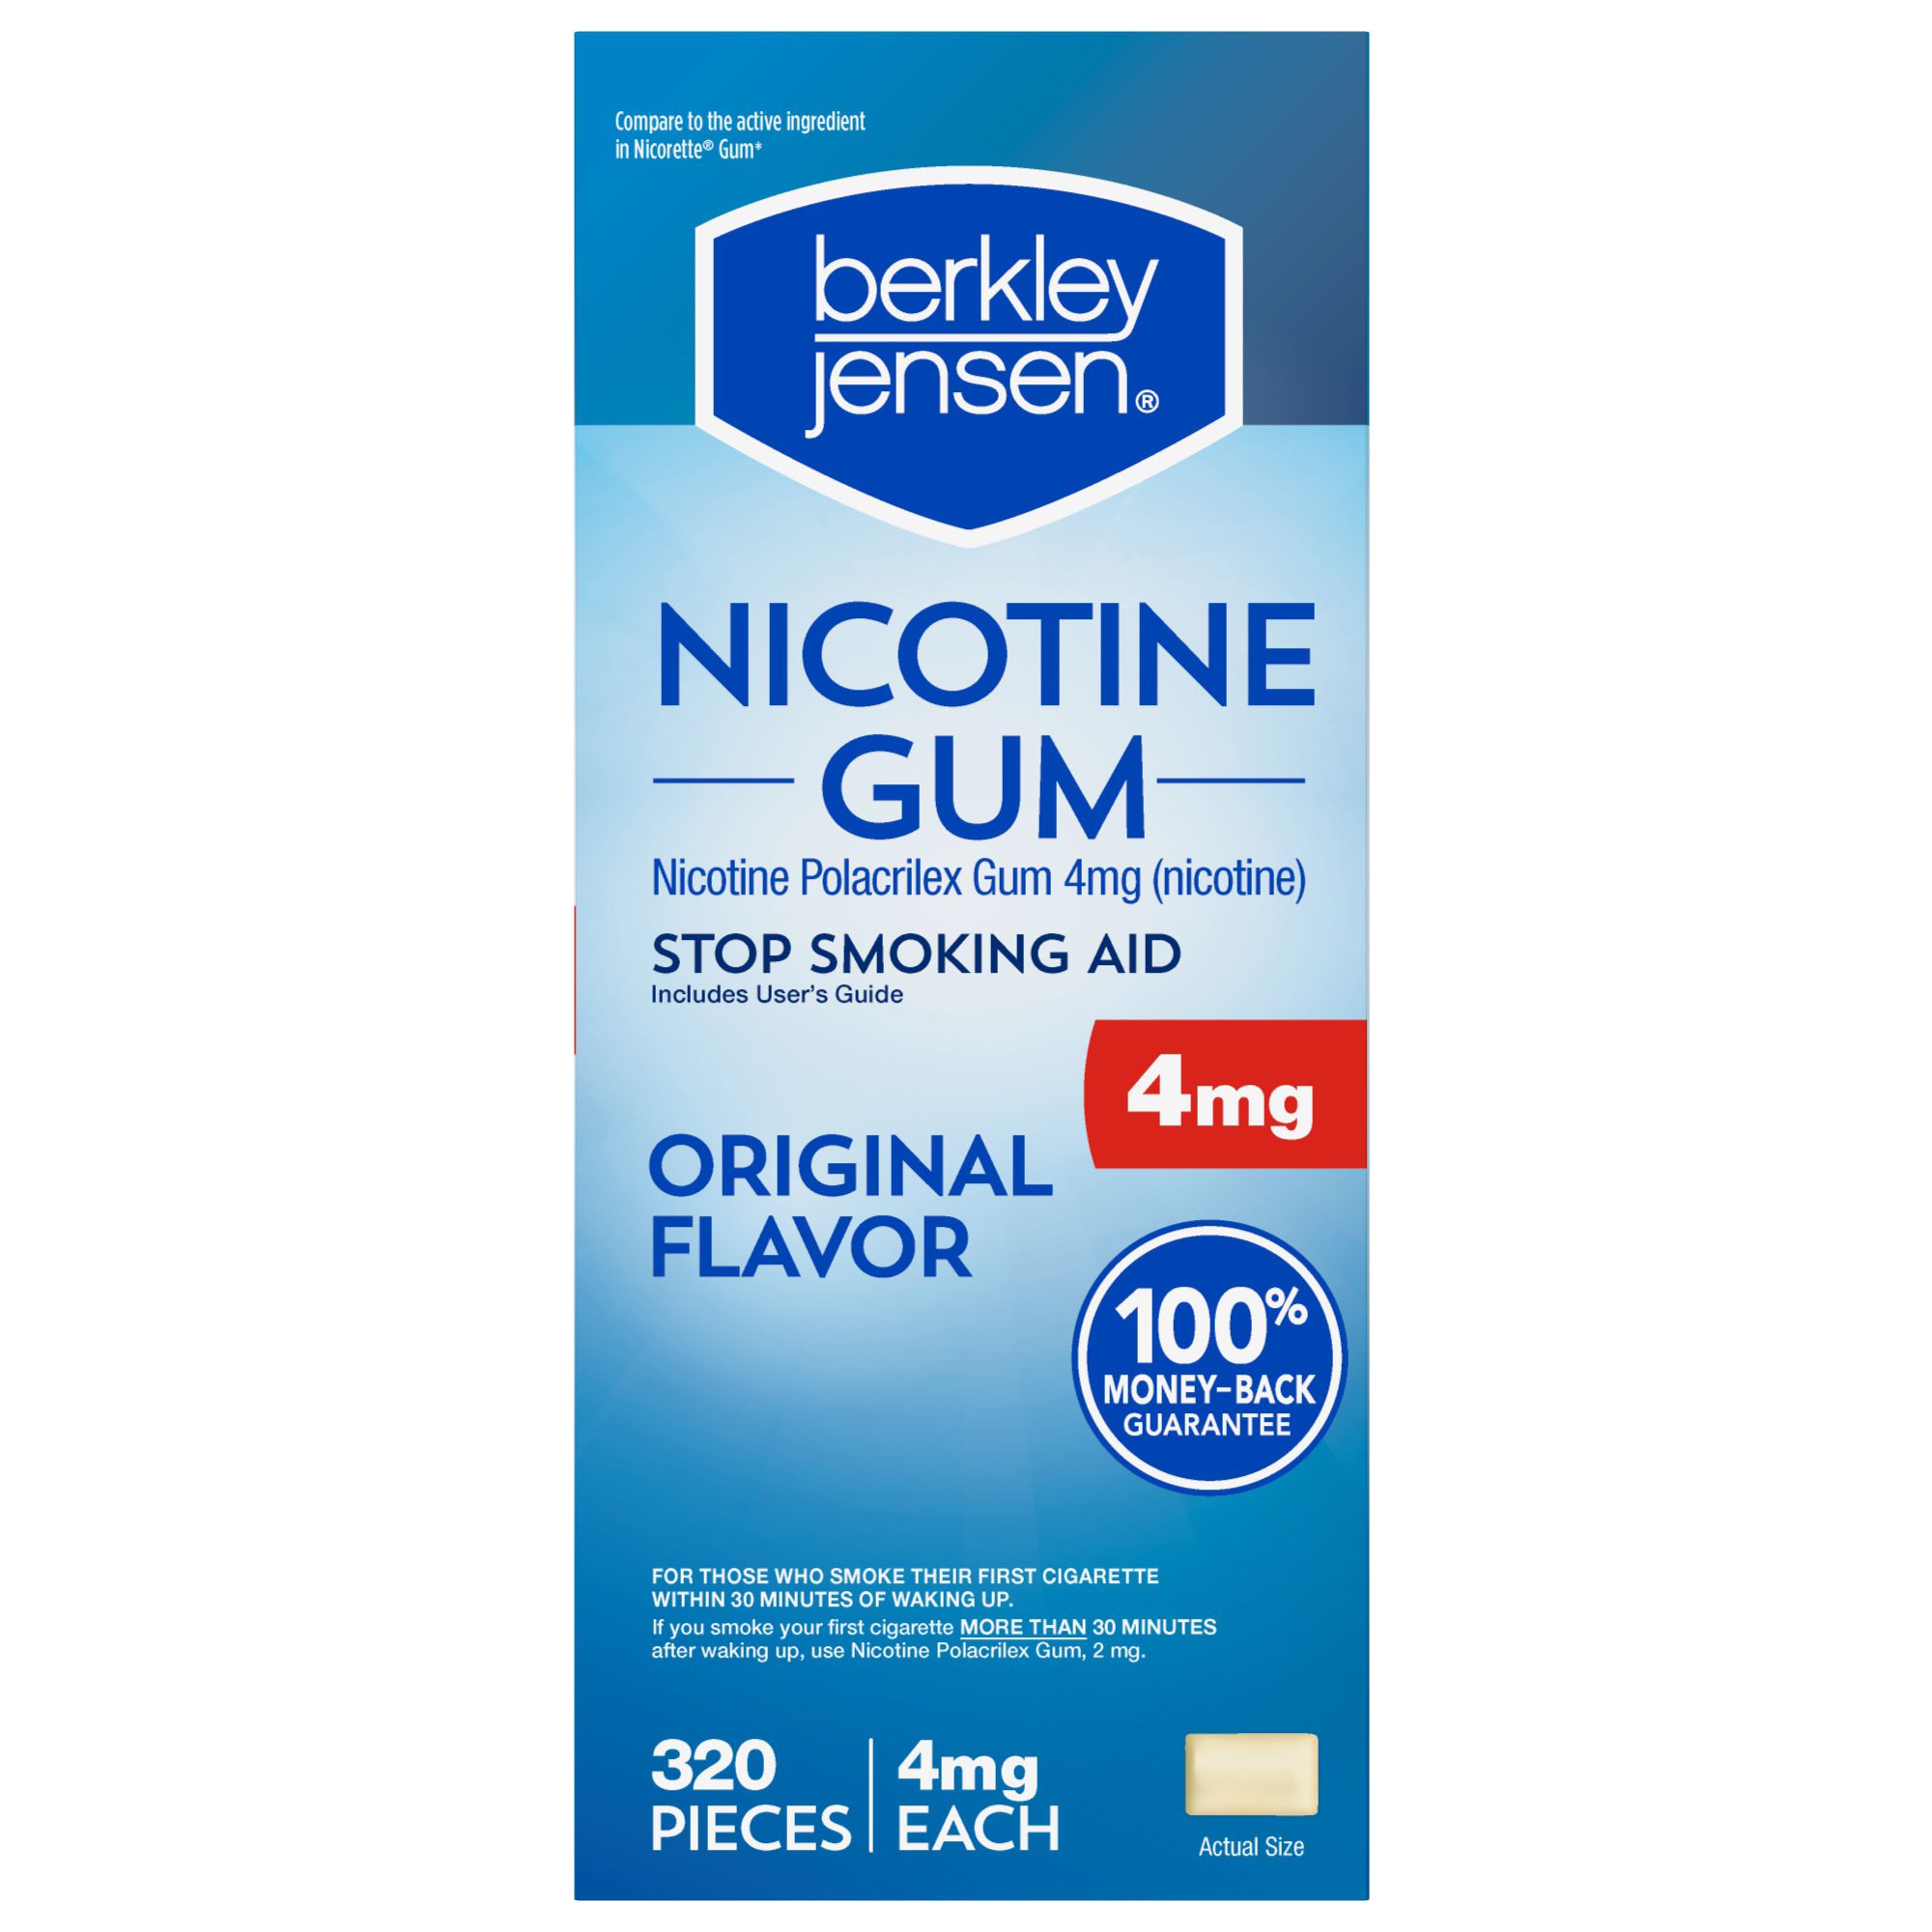 Berkley Jensen 4mg Uncoated Nicotine Gum, 320 ct.